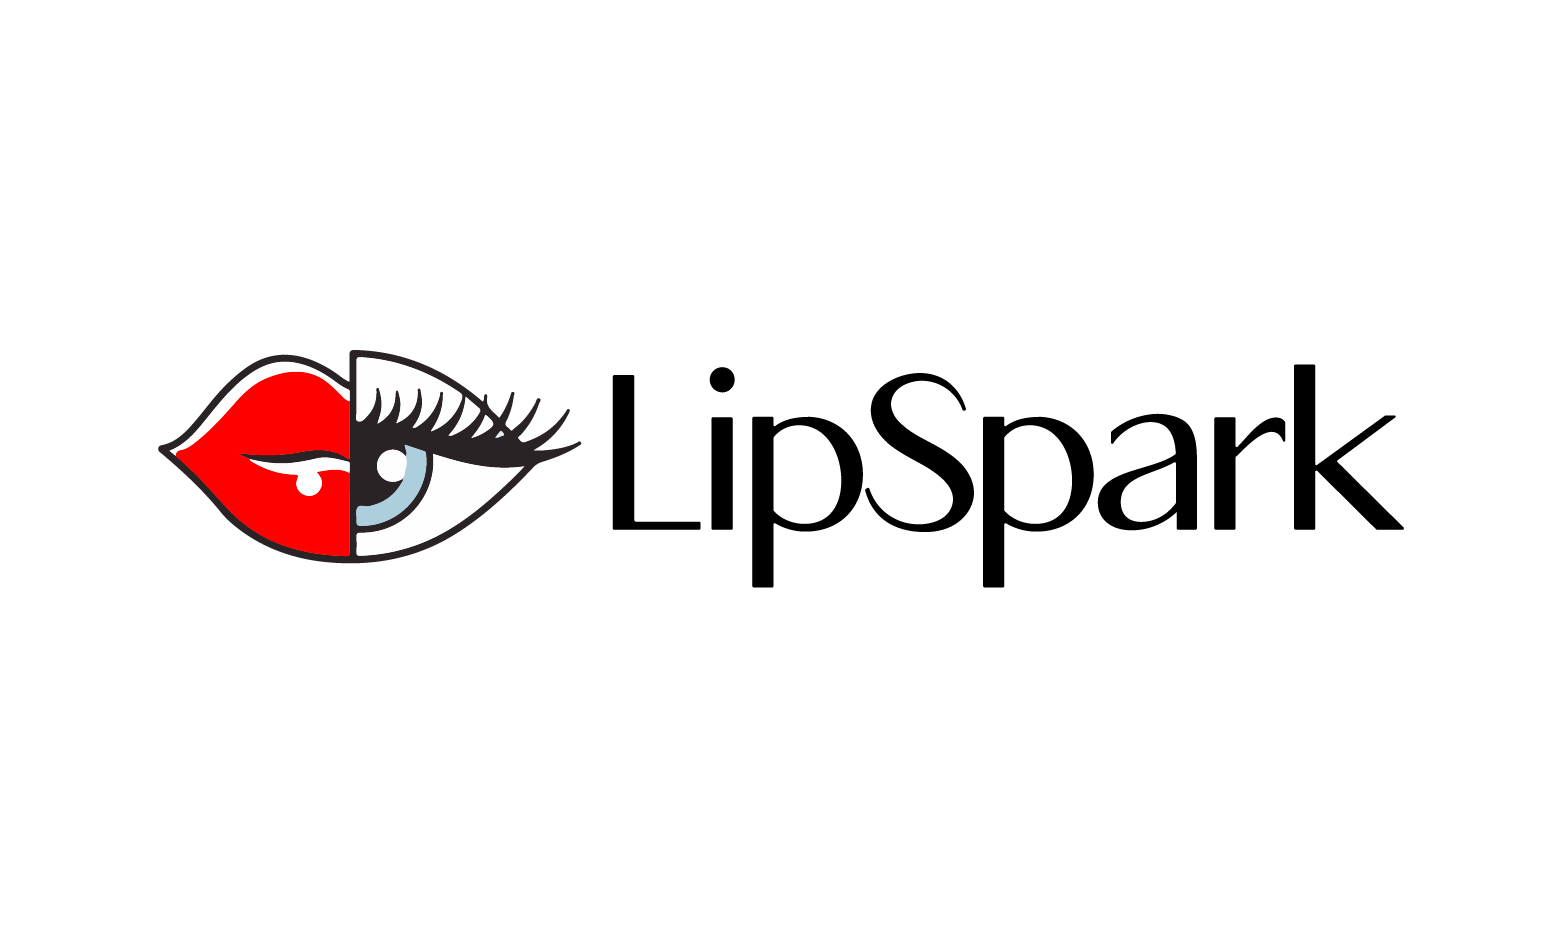 LipSpark.com - Creative brandable domain for sale